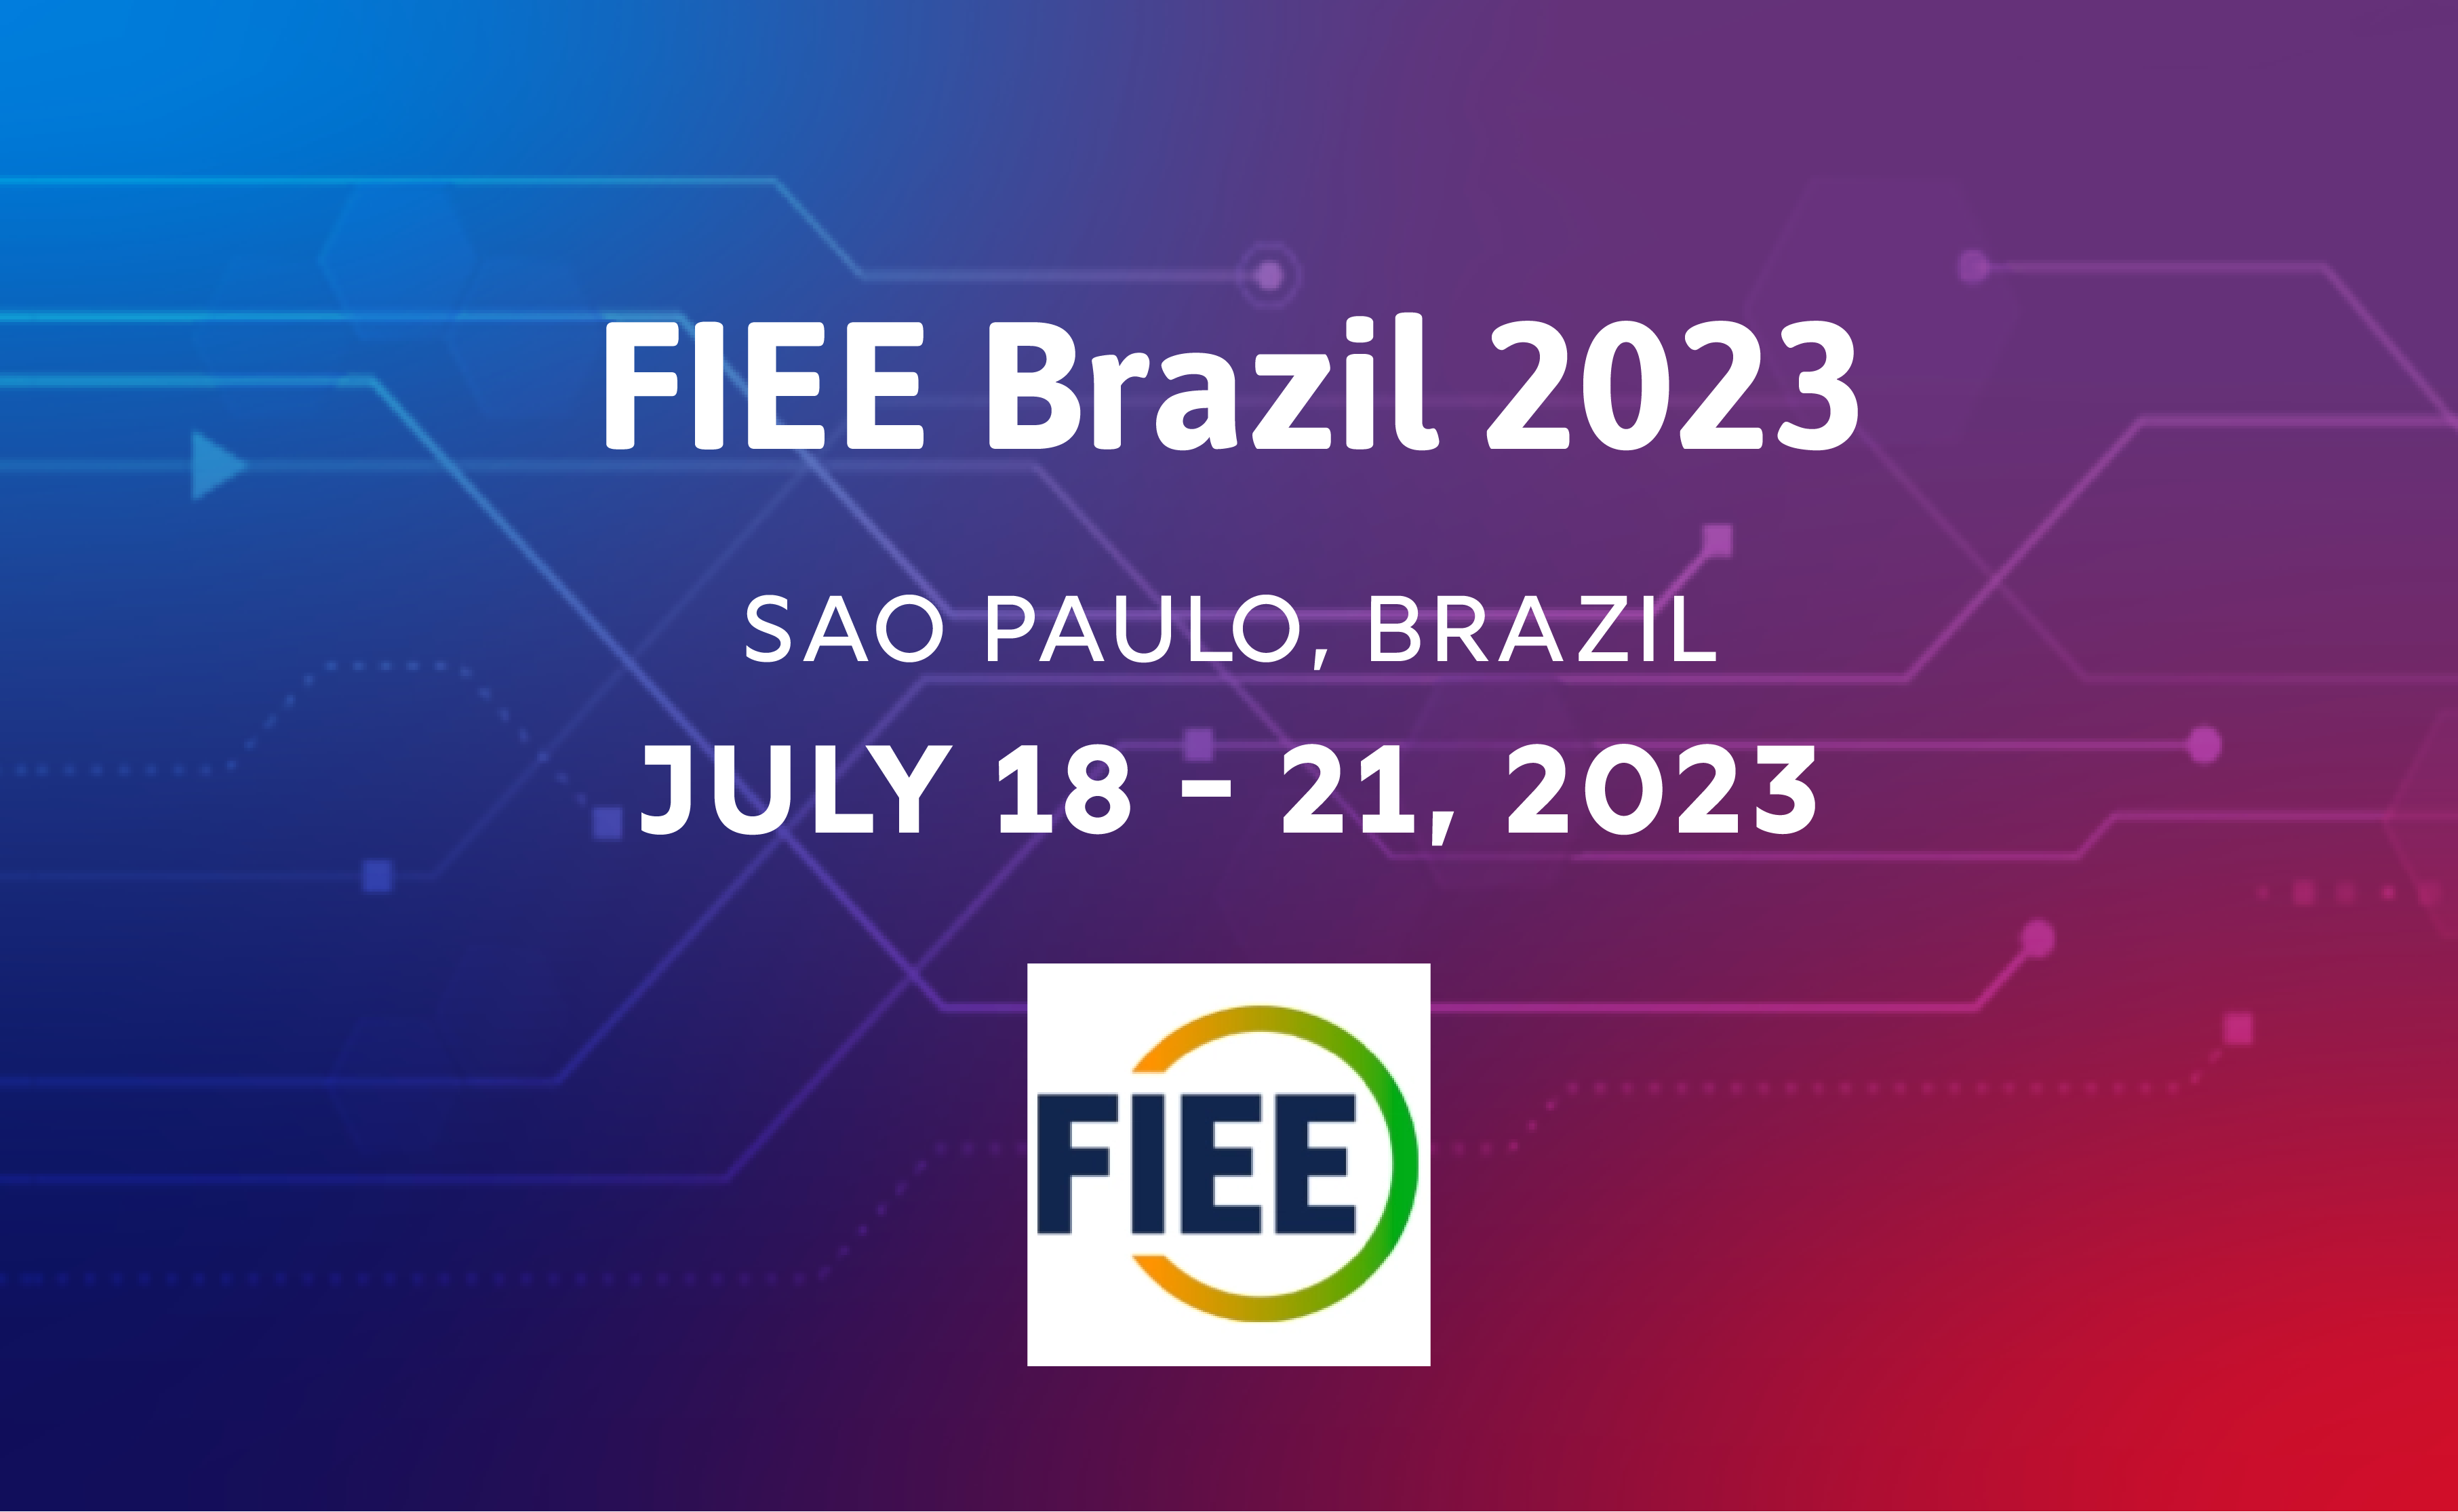 FIEE Brazil 2023 Tradeshow